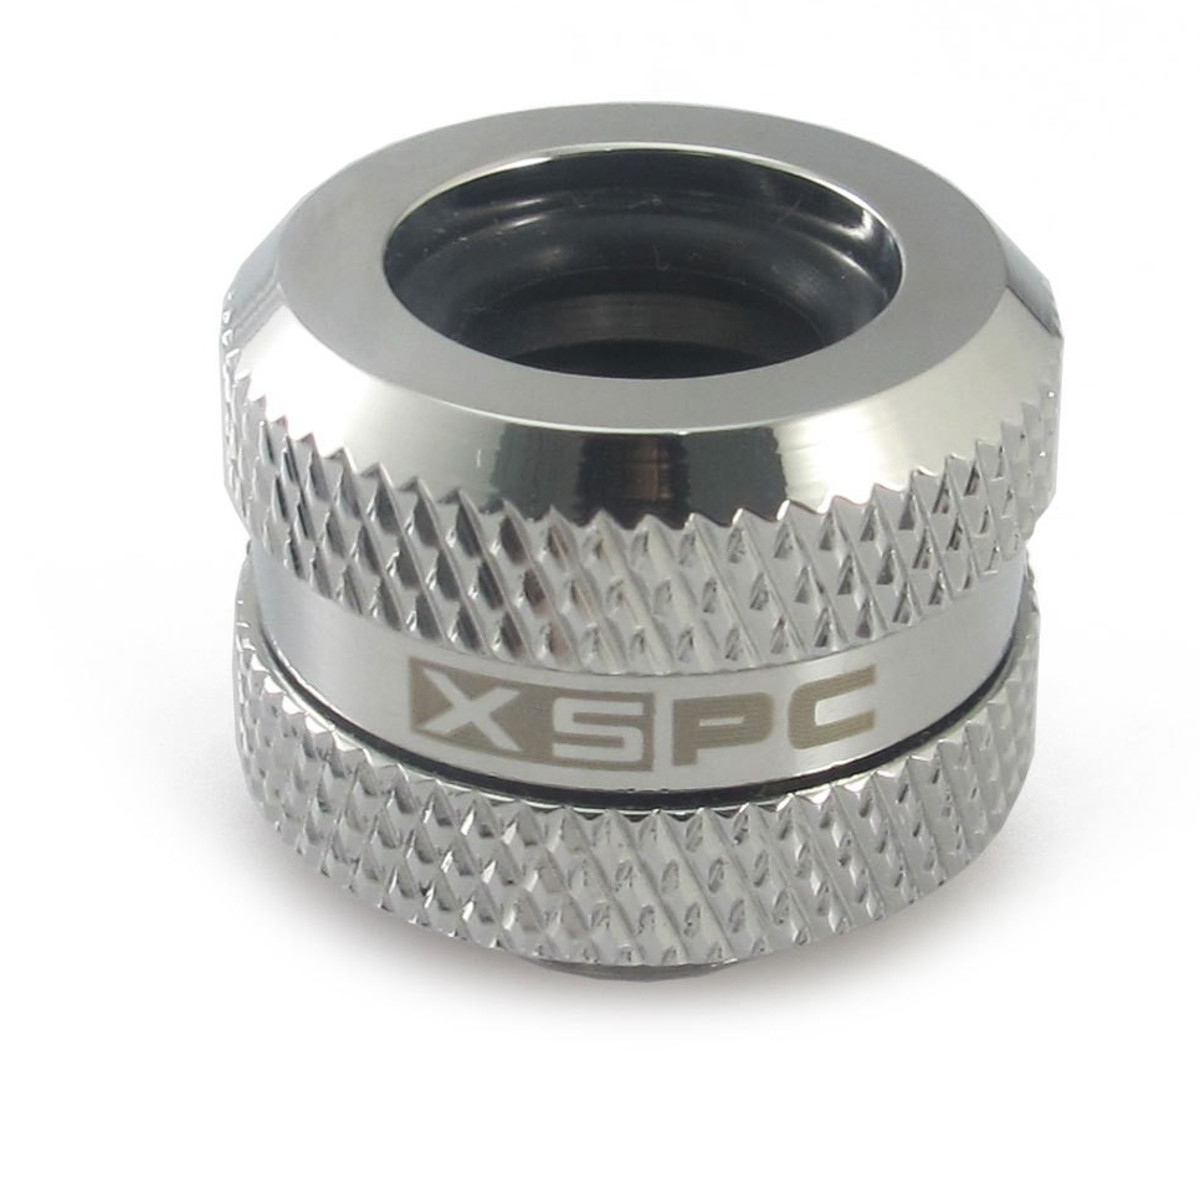 XSPC - XSPC G1/4" to 14mm Rigid Tubing Triple Seal Fitting - (Chrome)